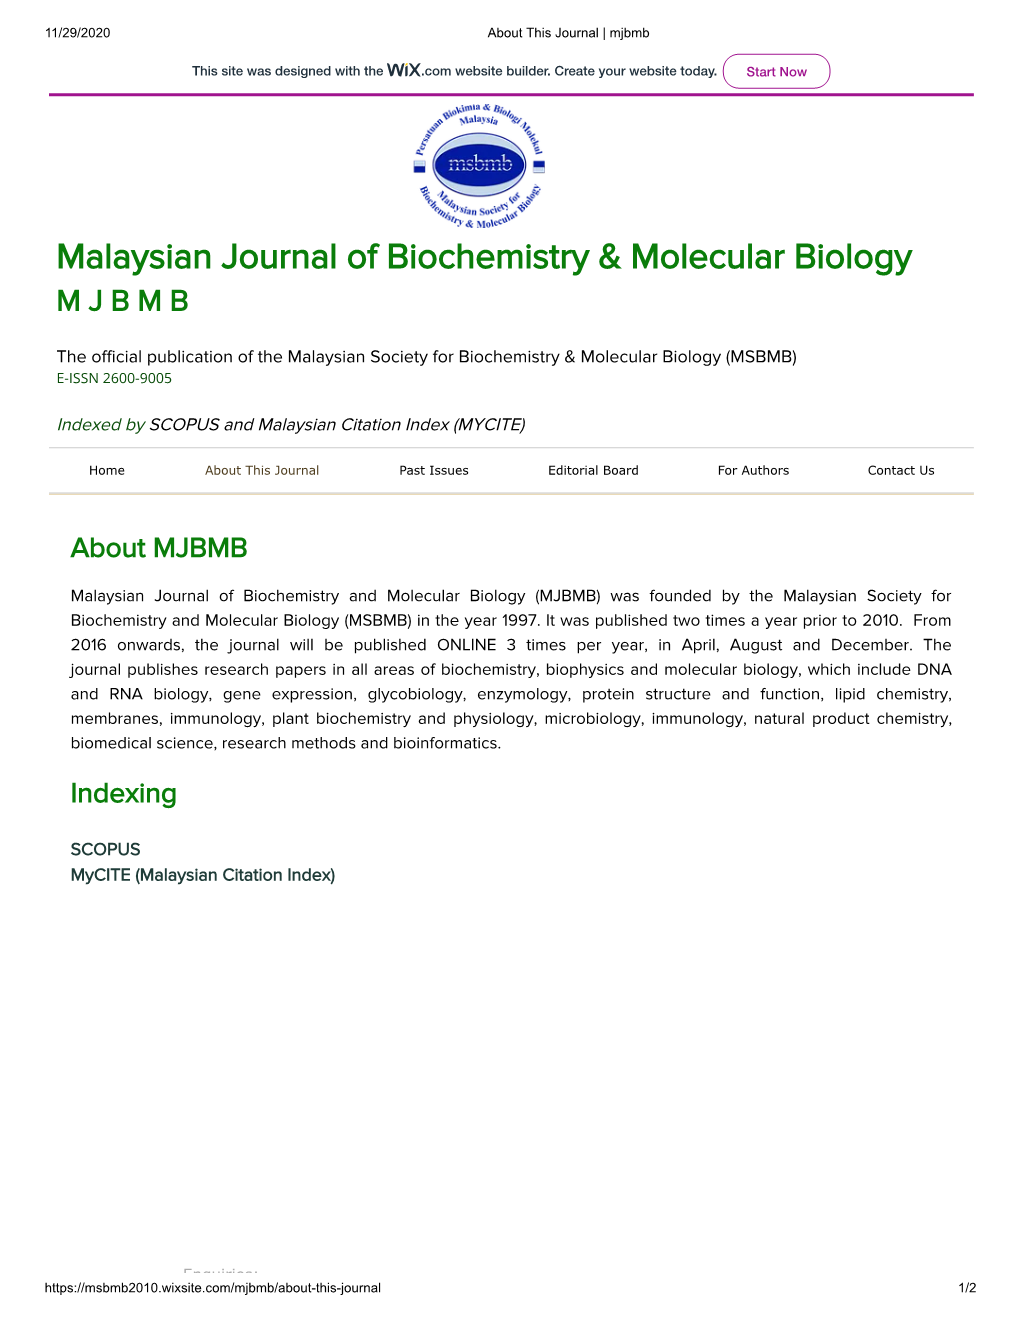 Malaysian Journal of Biochemistry & Molecular Biology